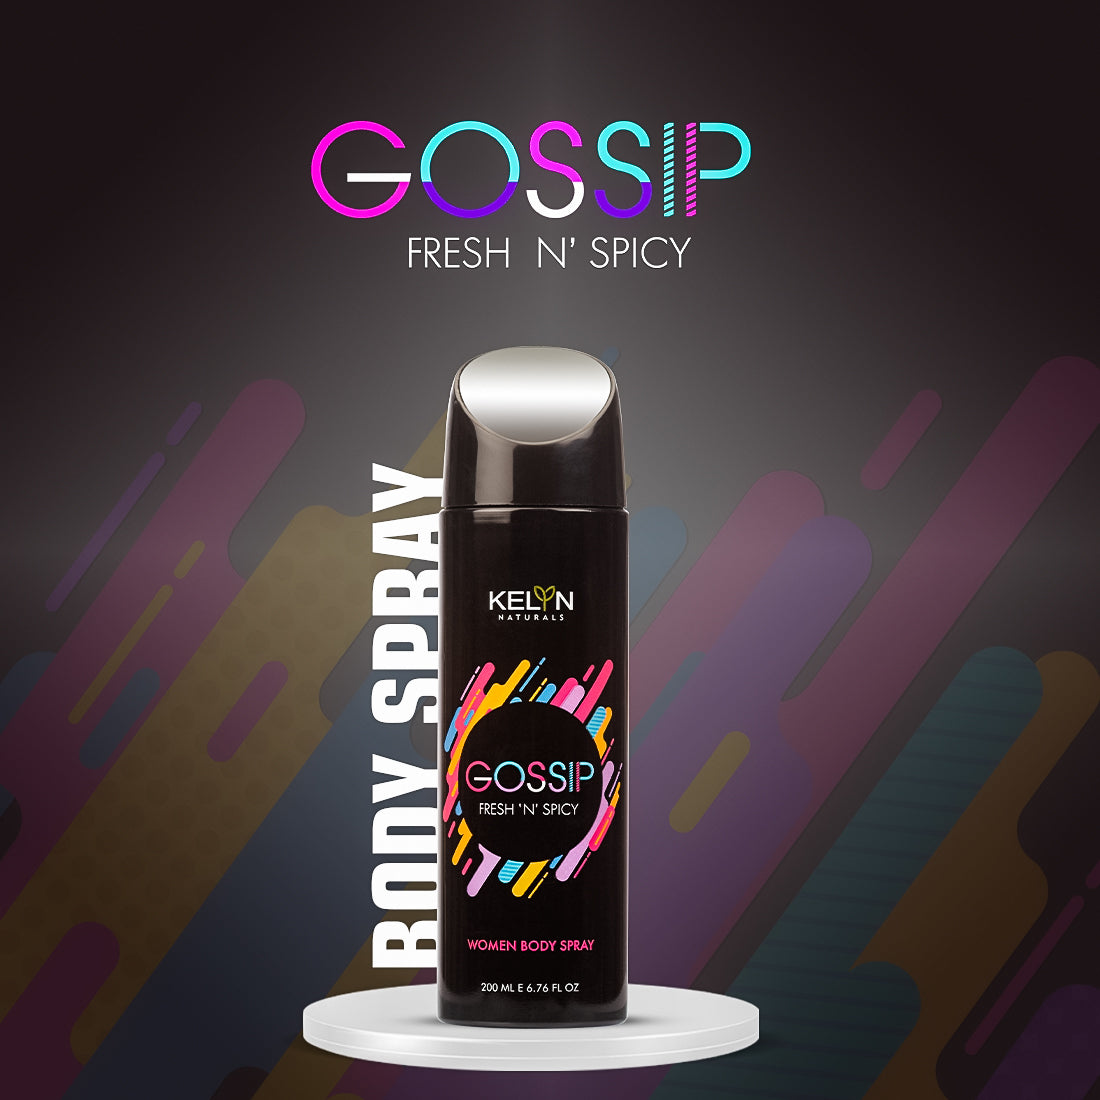 Gossip Deodorant for Women Body Spray, 200 ml